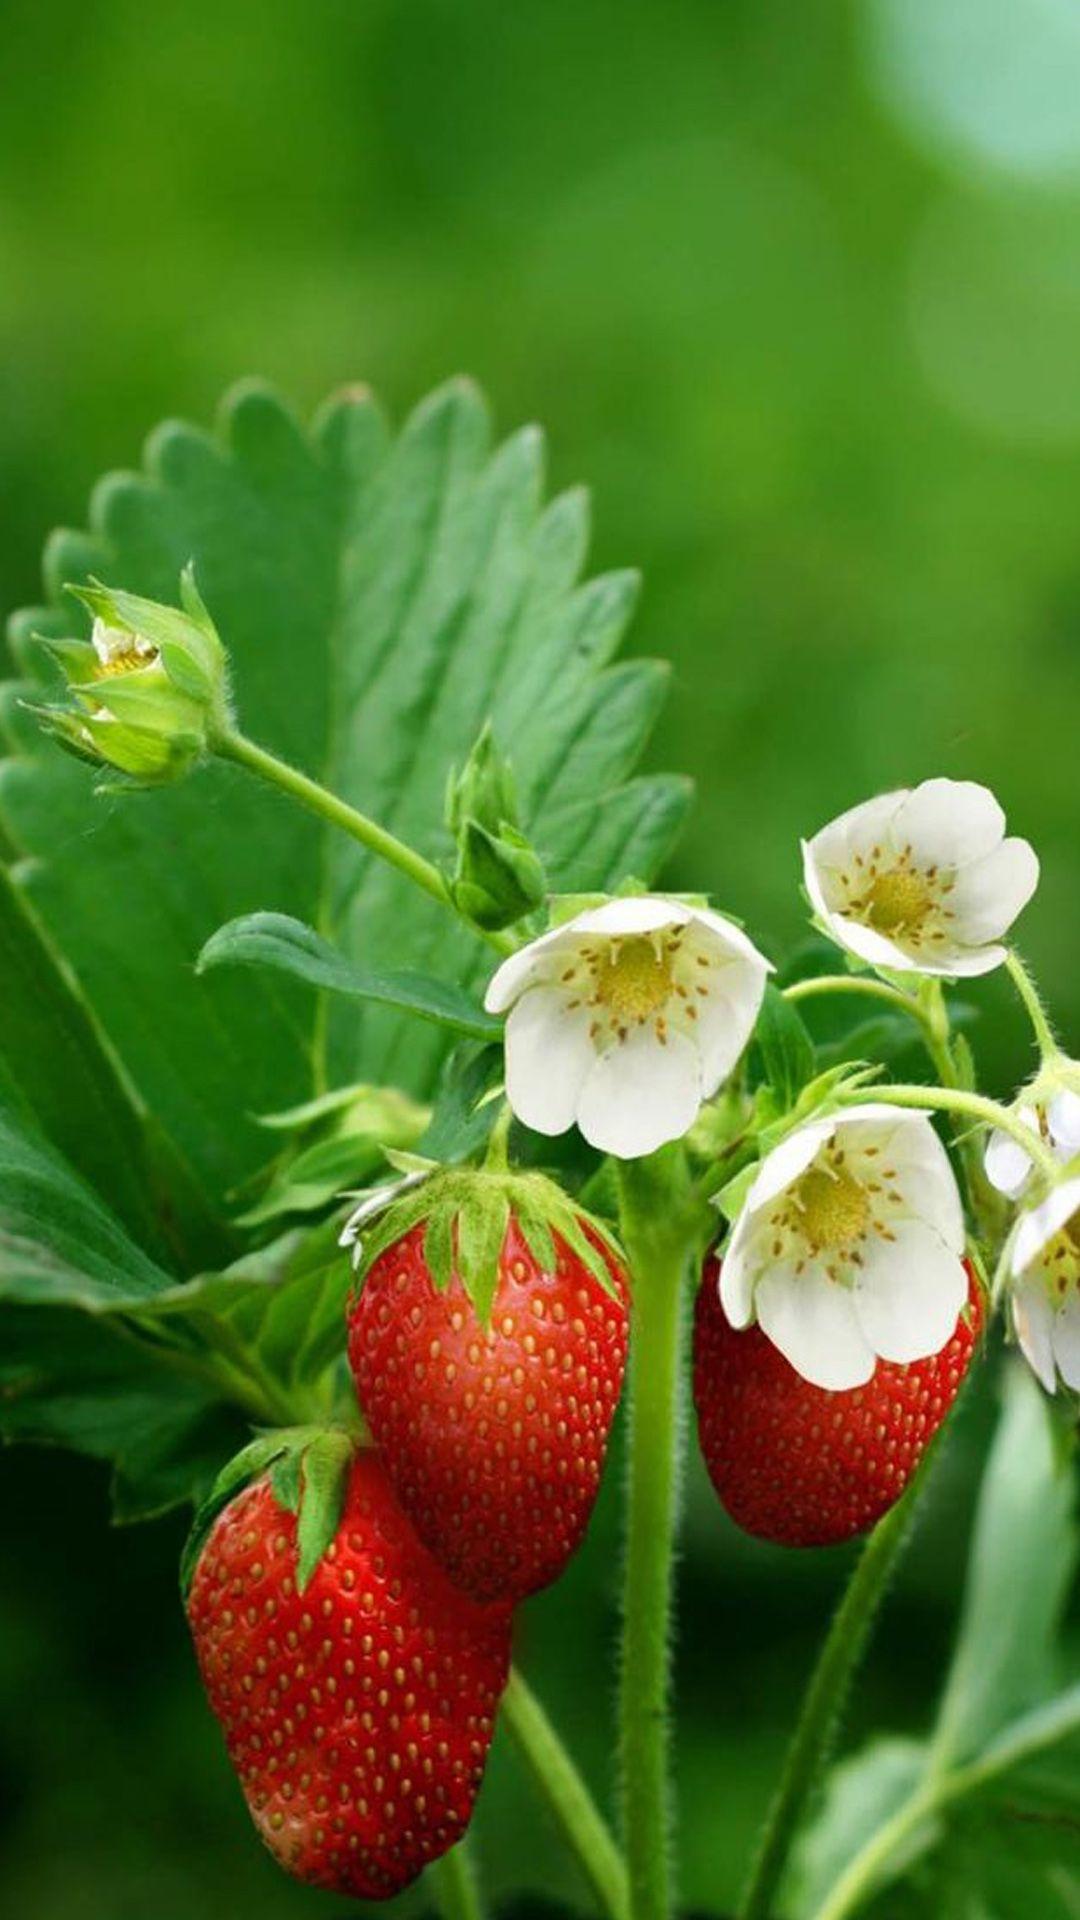 Strawberry flowers for iPhone 6 Plus Wallpaper. Các địa điểm để ghé